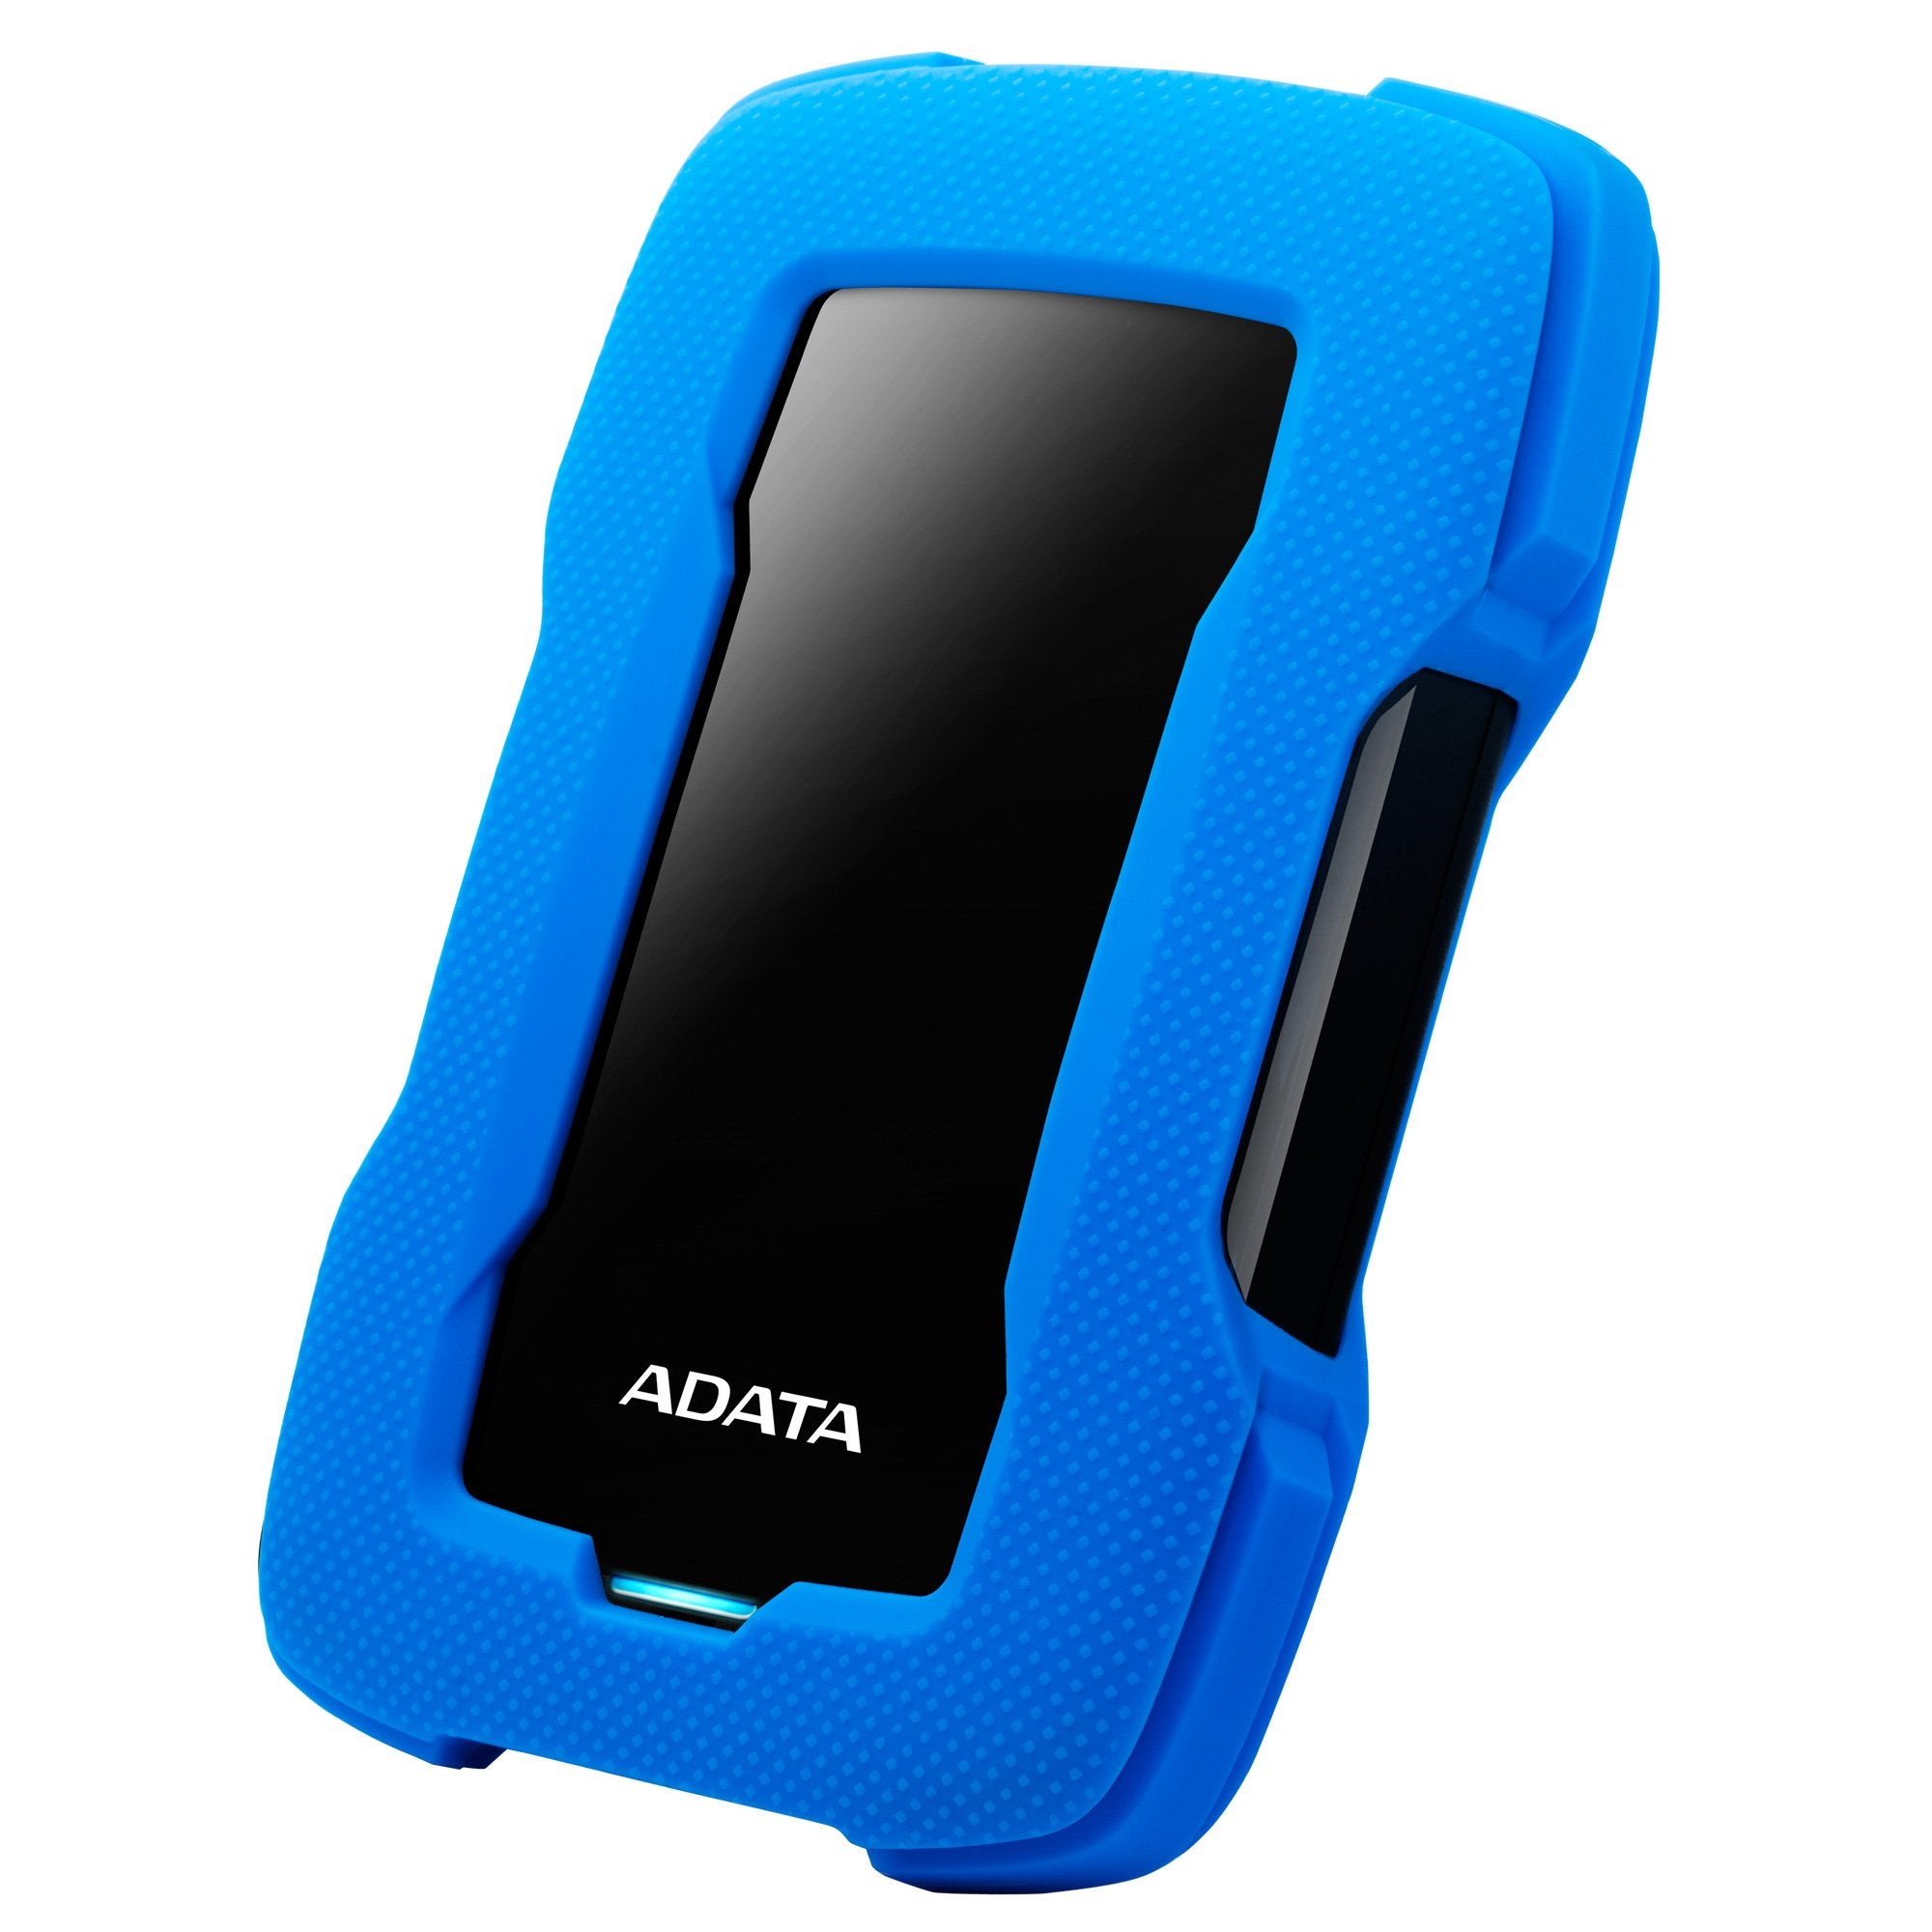 'Adata Hd330 1000 Gb blau Externe Festplatte – Externe Festplatten (1000 Gb, 2, 5, Micro B, 3.0 (3.1 Gen 1), Stromversorgung durch USB blau)